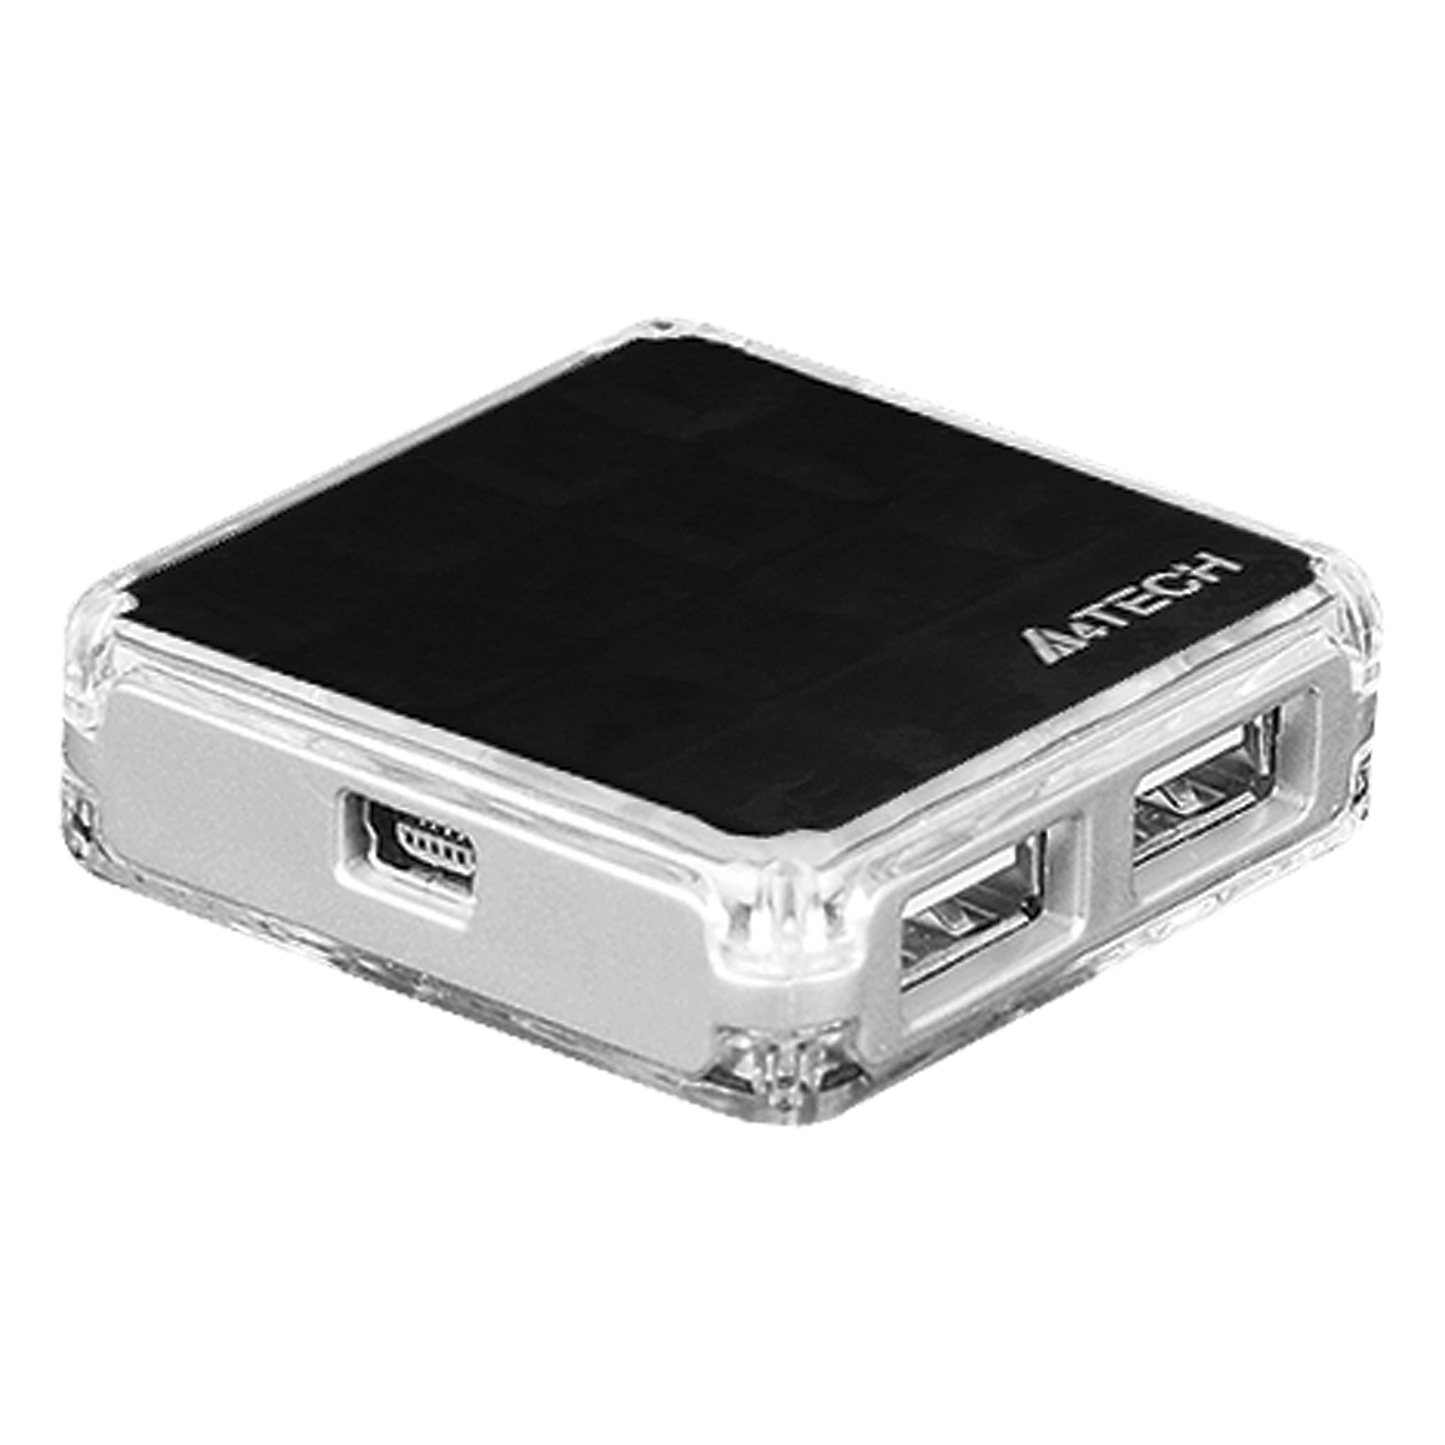 A4tech USB 4-Ports Pocket Hub HUB-56